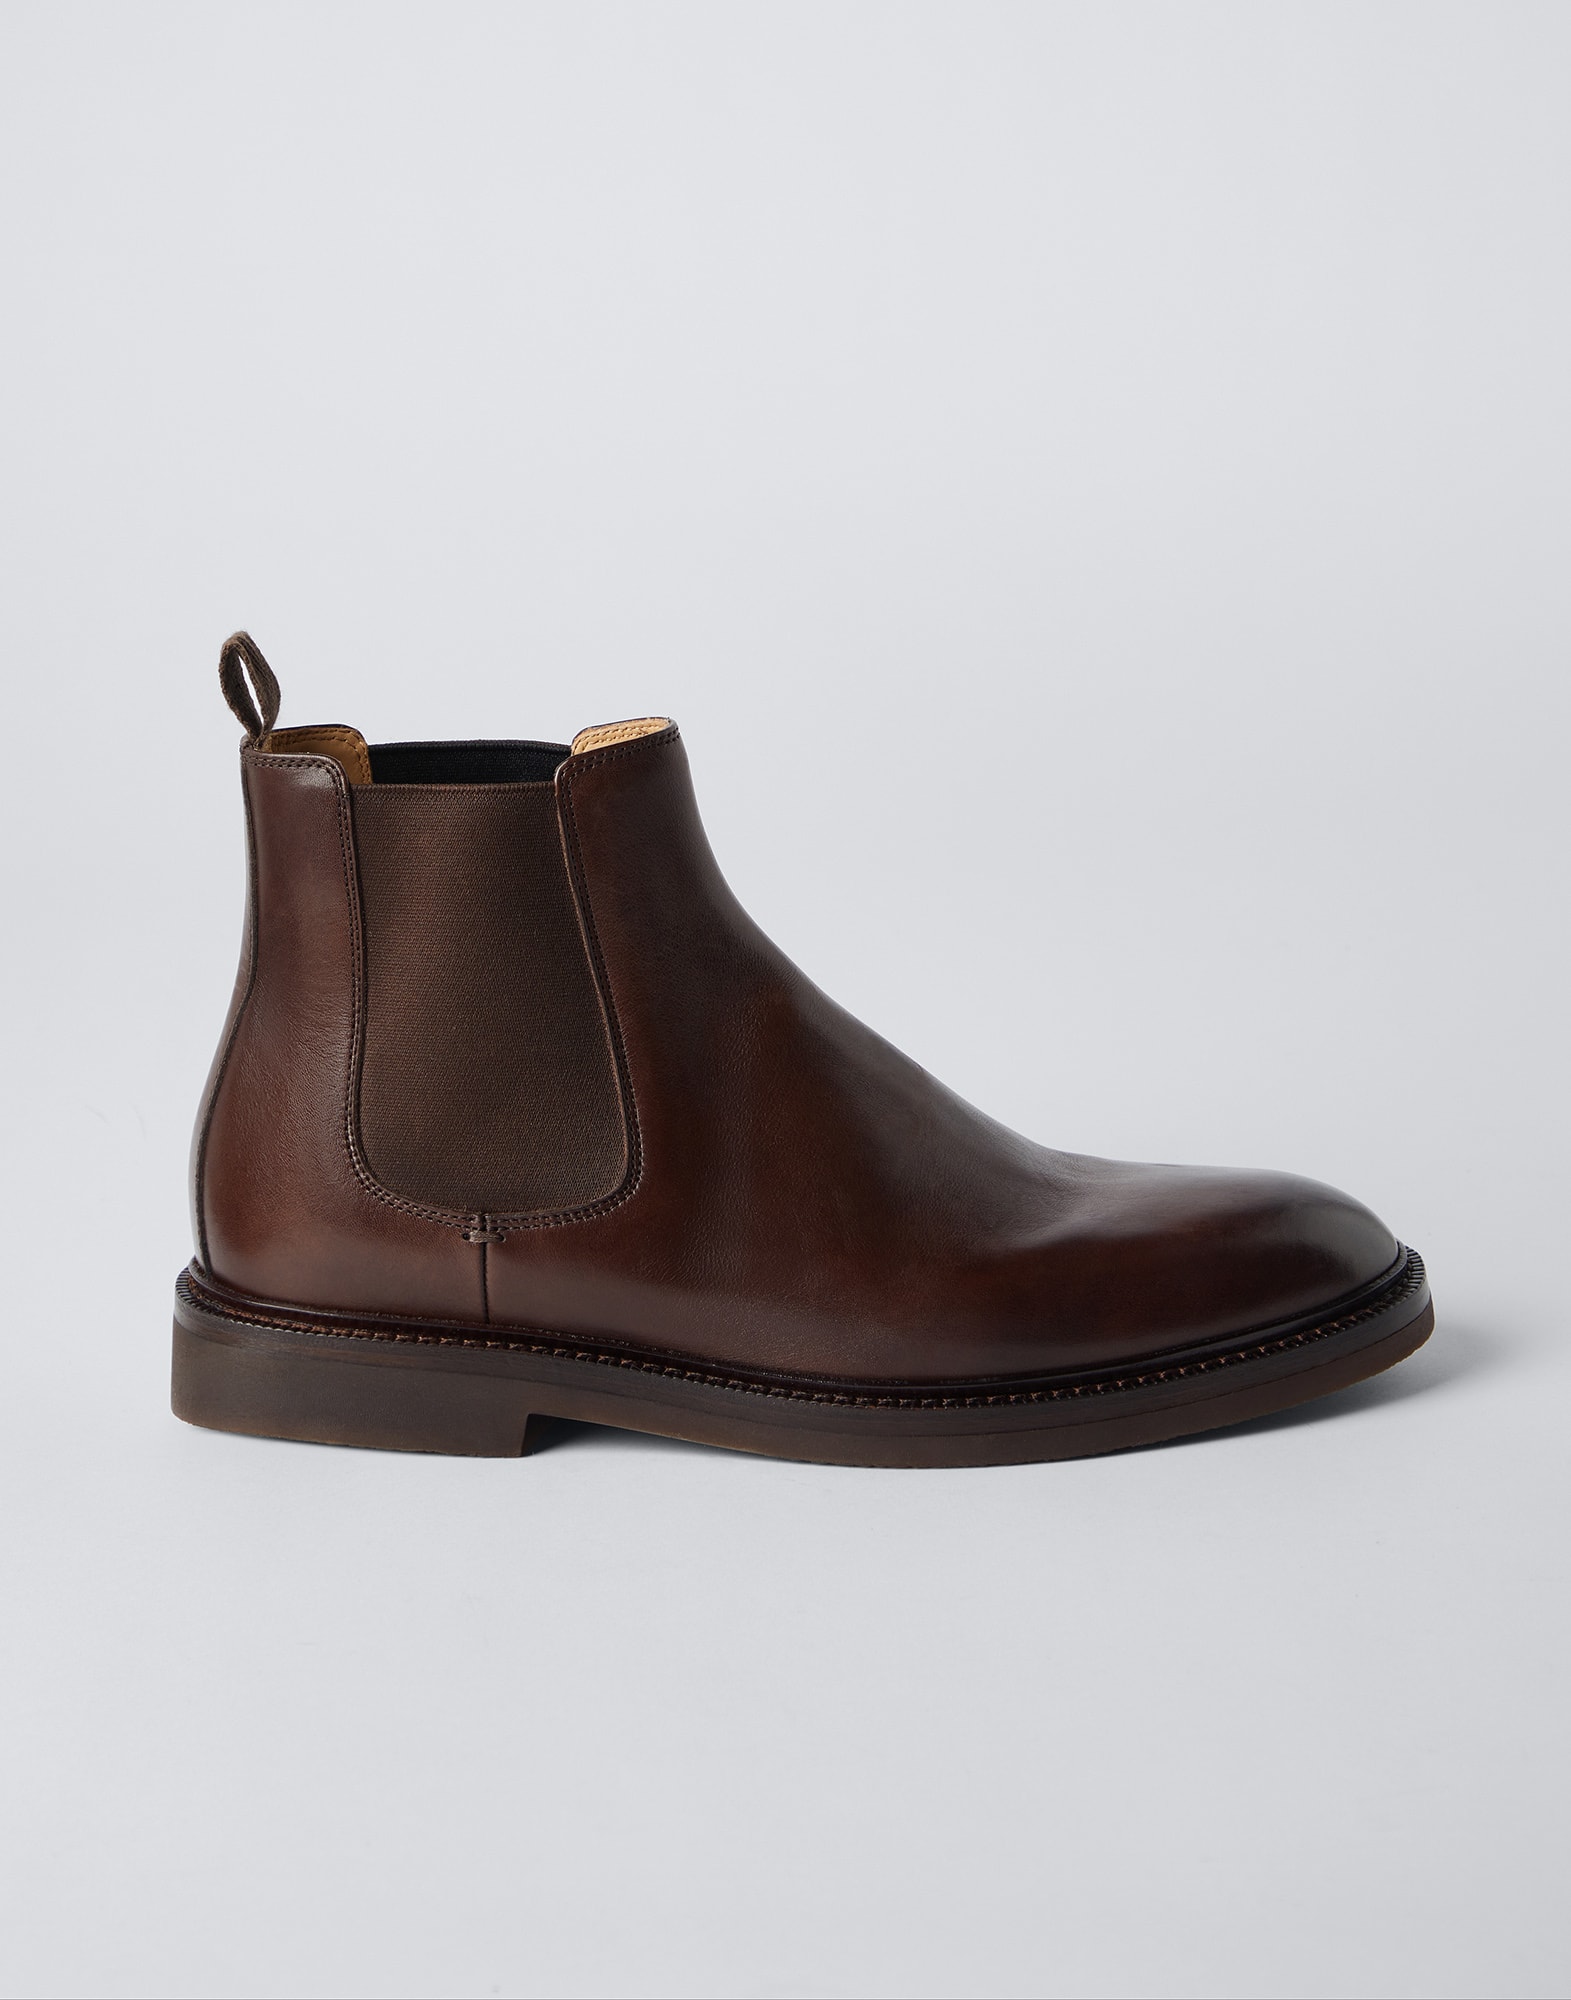 Calfskin Chelsea boots (232MZUANTE818) for Man | Brunello Cucinelli